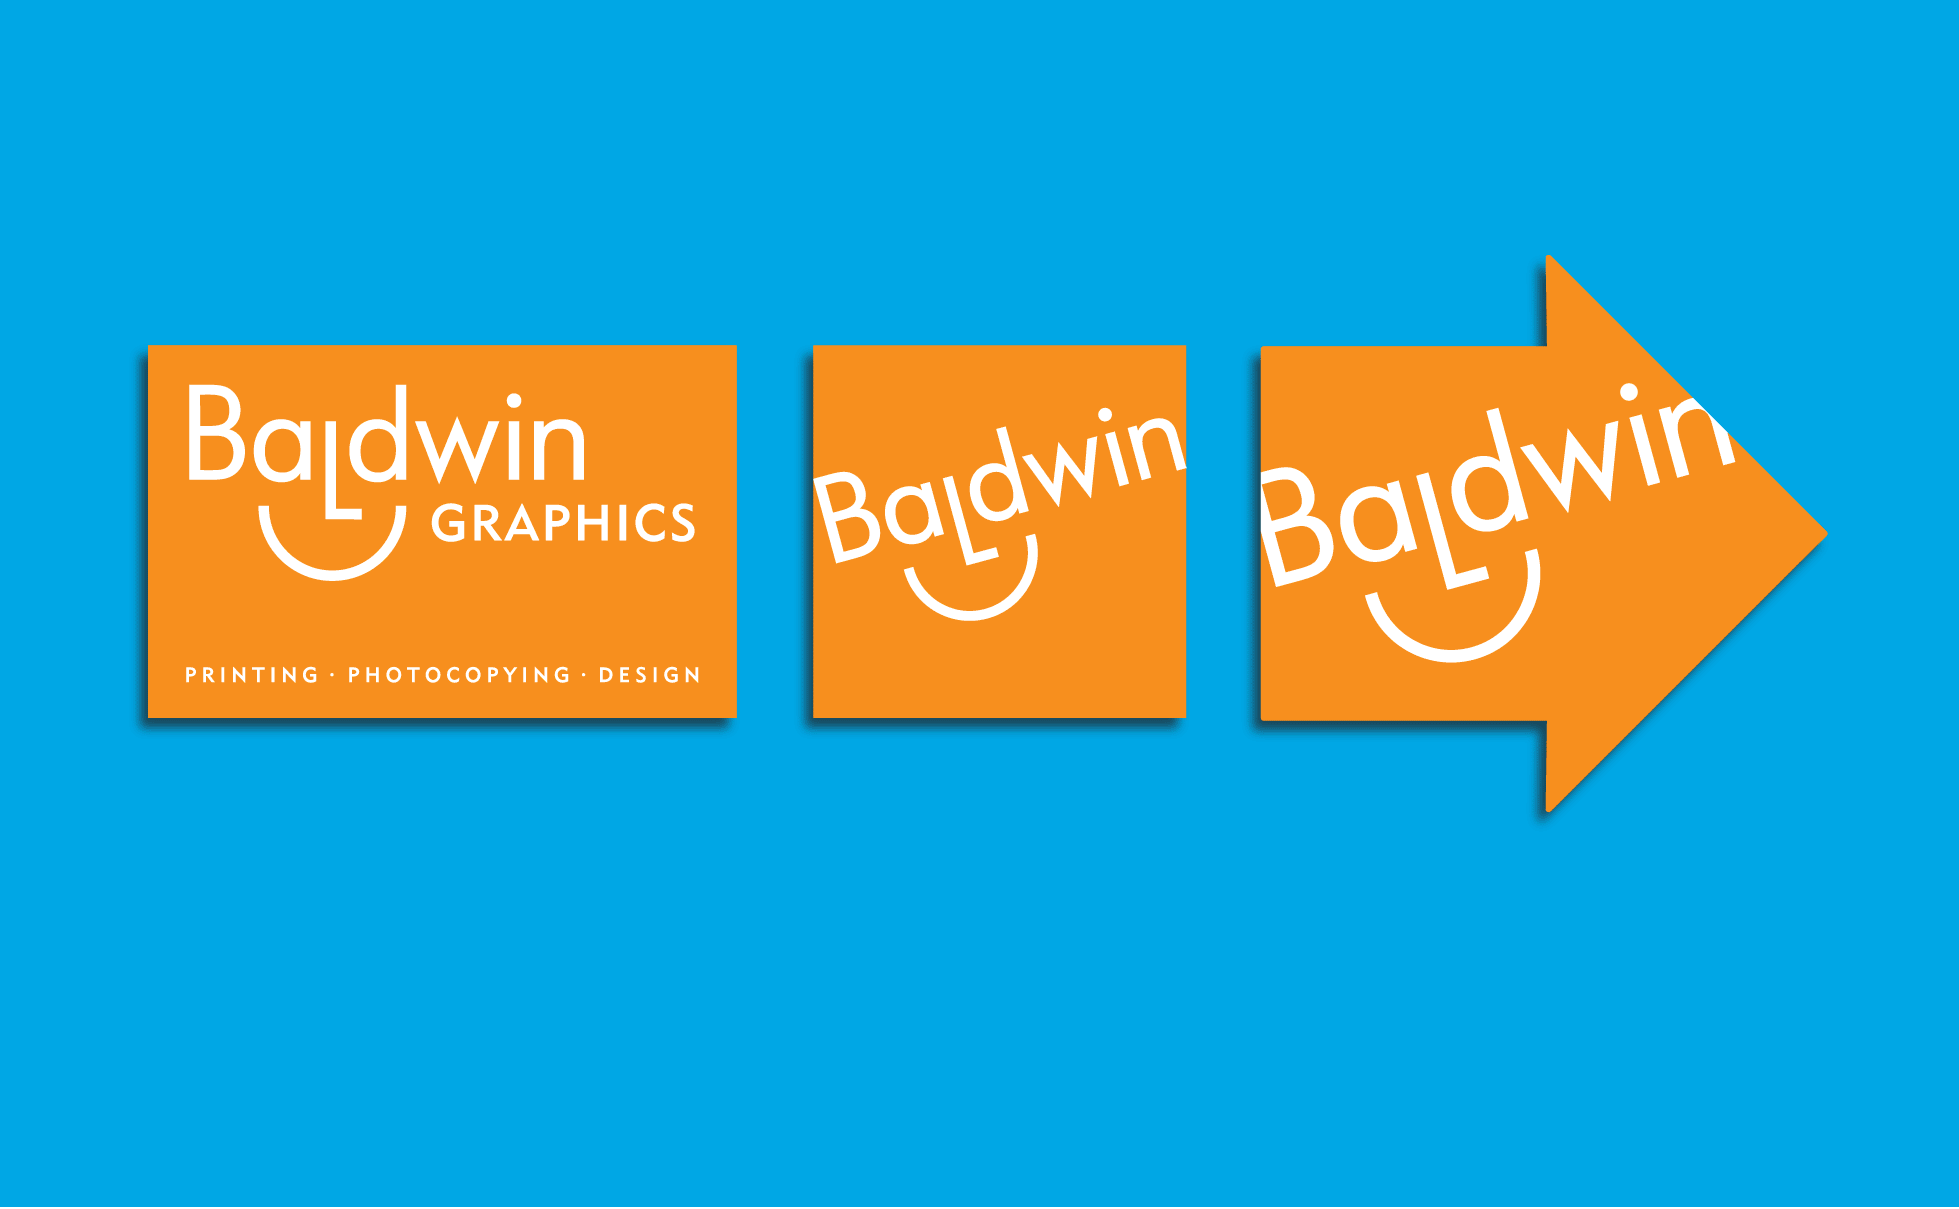 Baldwin Signs